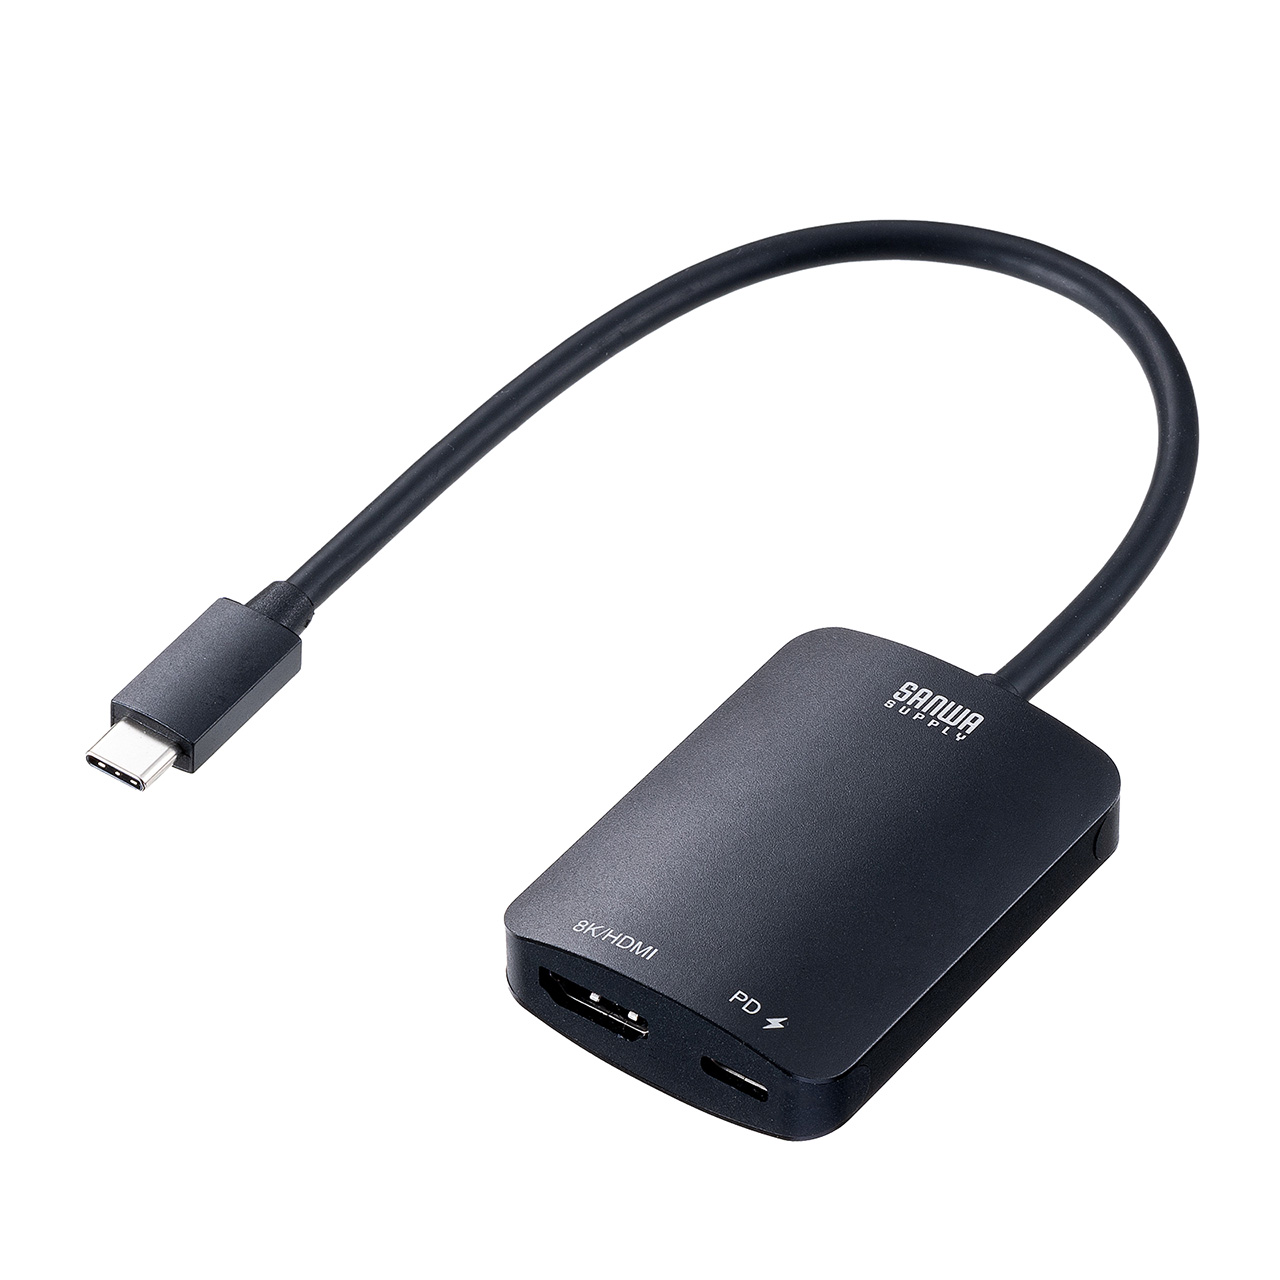 USB Type-C HDMI 変換アダプタ 8K/60Hz 4K/144Hz PD100W ケーブル長20cm MacBook iPad Pro Air Switch 対応 HDR ブラック 500-KC041